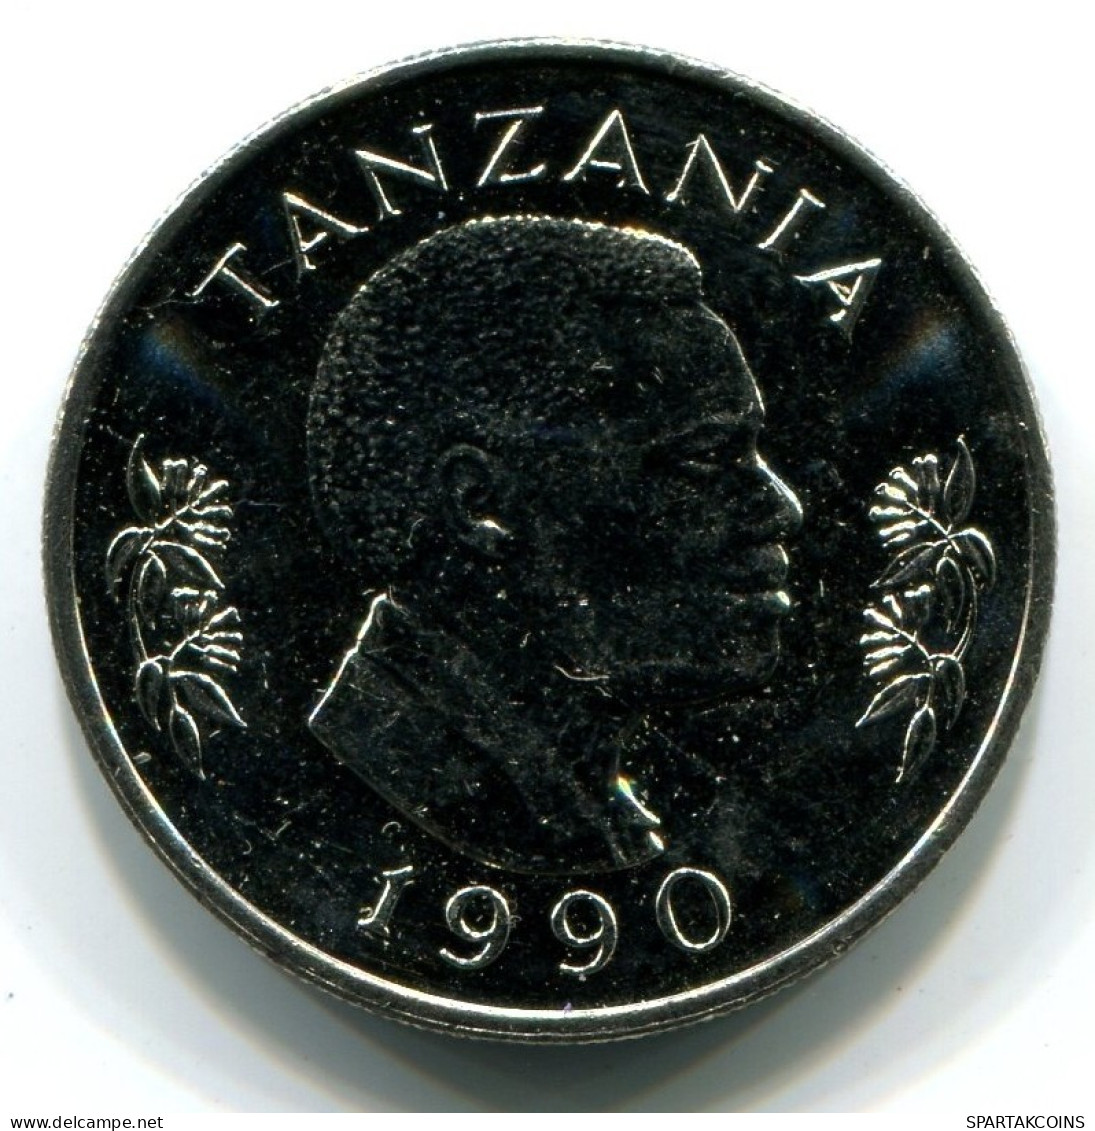 1 SHILLING 1990 TANZANIE TANZANIA UNC President Mwinyi Torch Pièce #W11264.F.A - Tanzania